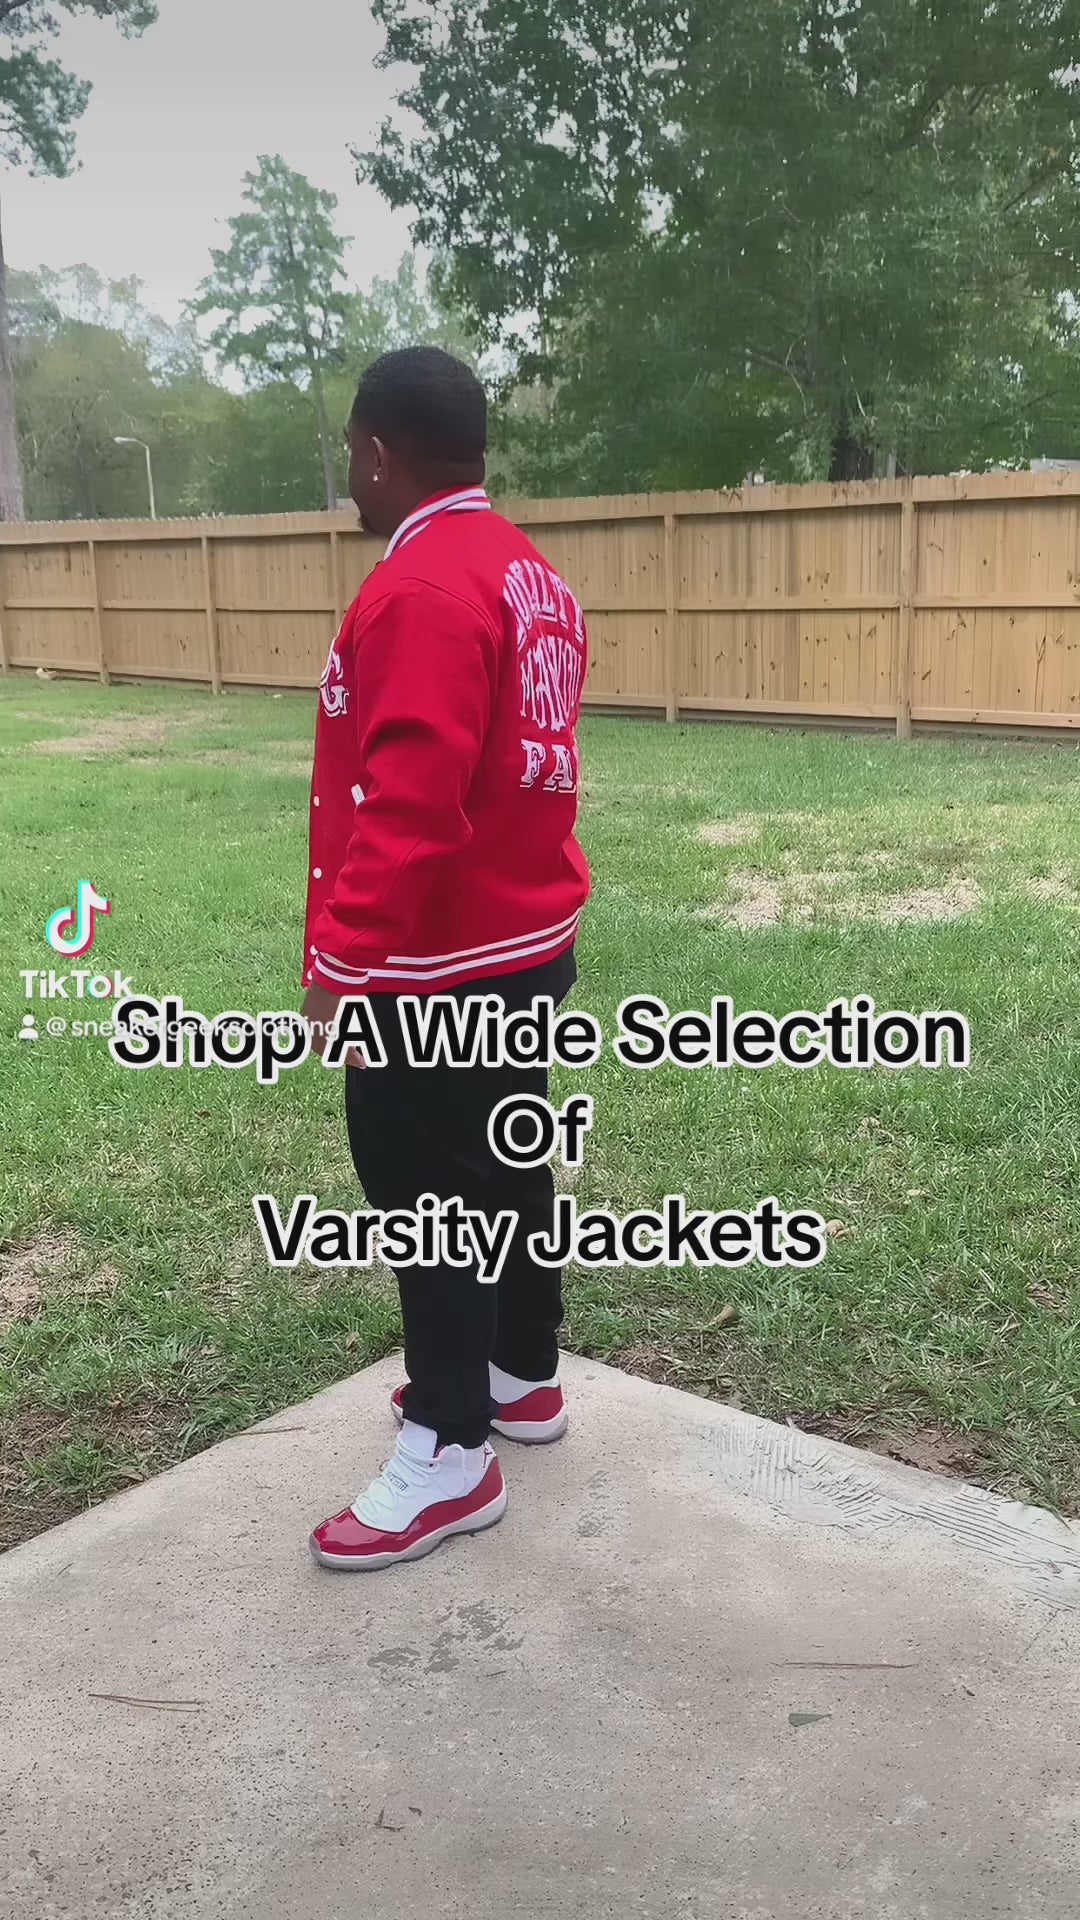 The Game Changer Varsity Jacket to match Retro Jordan 12 Cherry sneakers